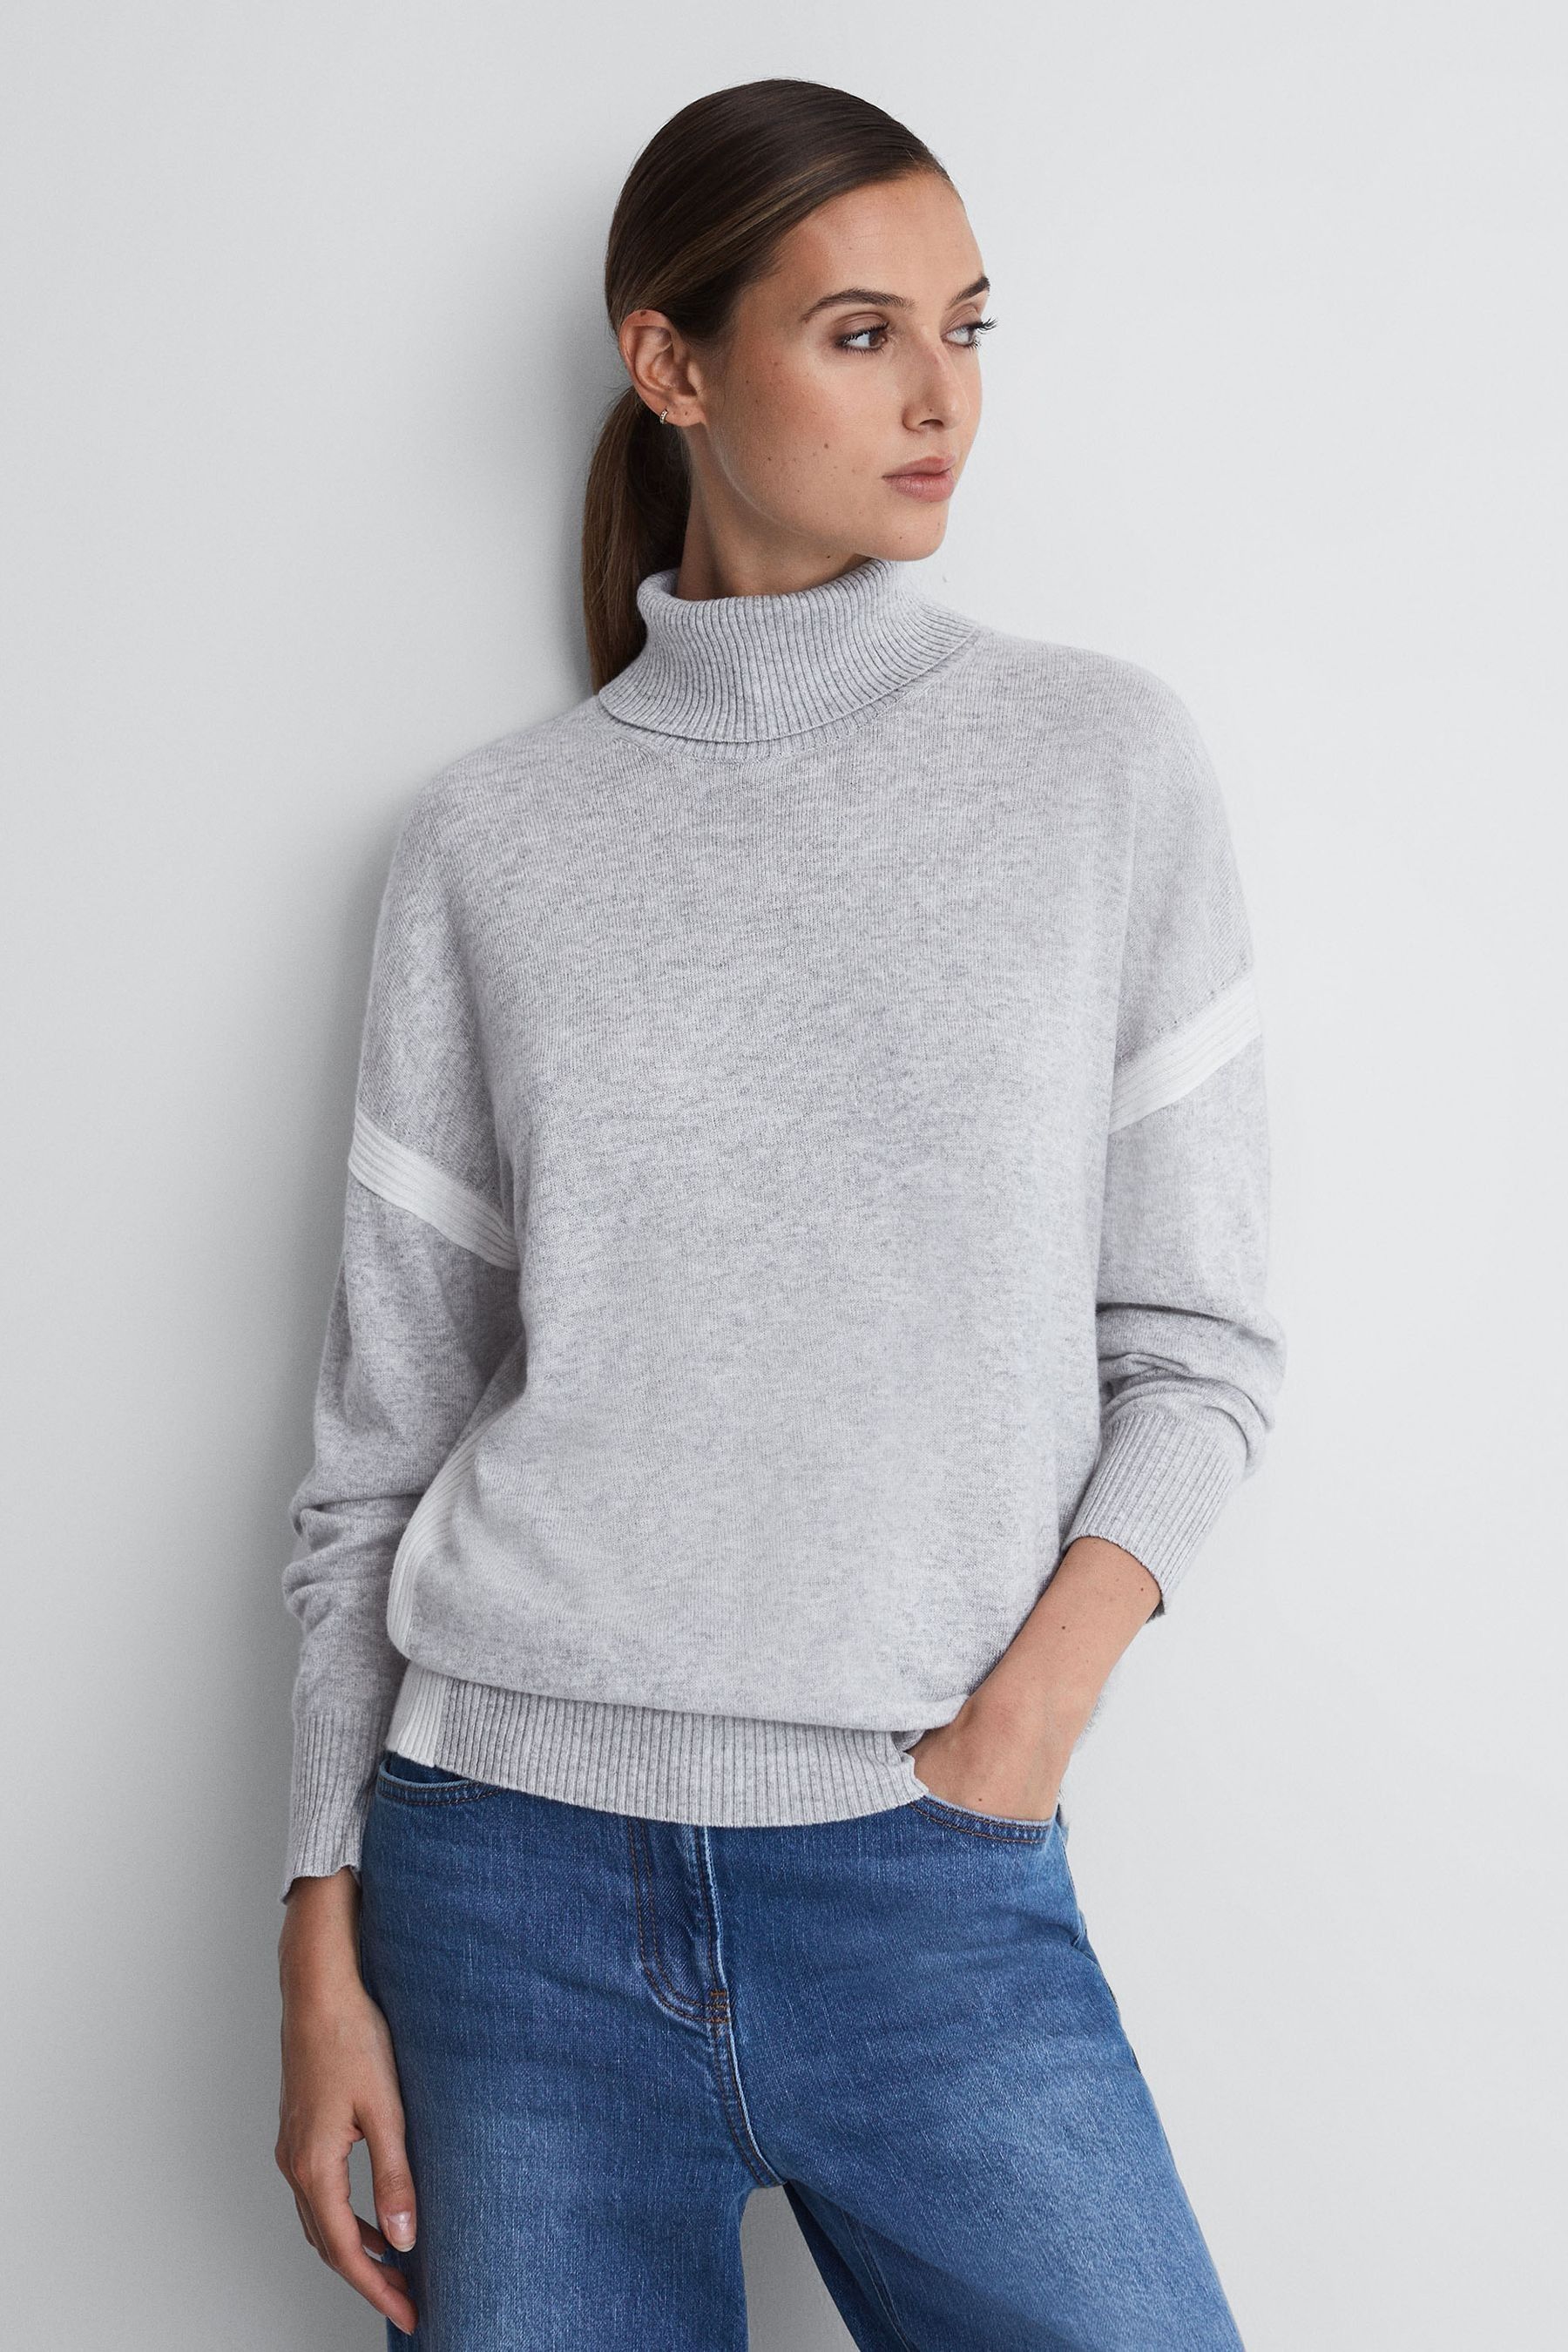 Reiss Nova Color Blocked Turtleneck Sweater In Cream/grey